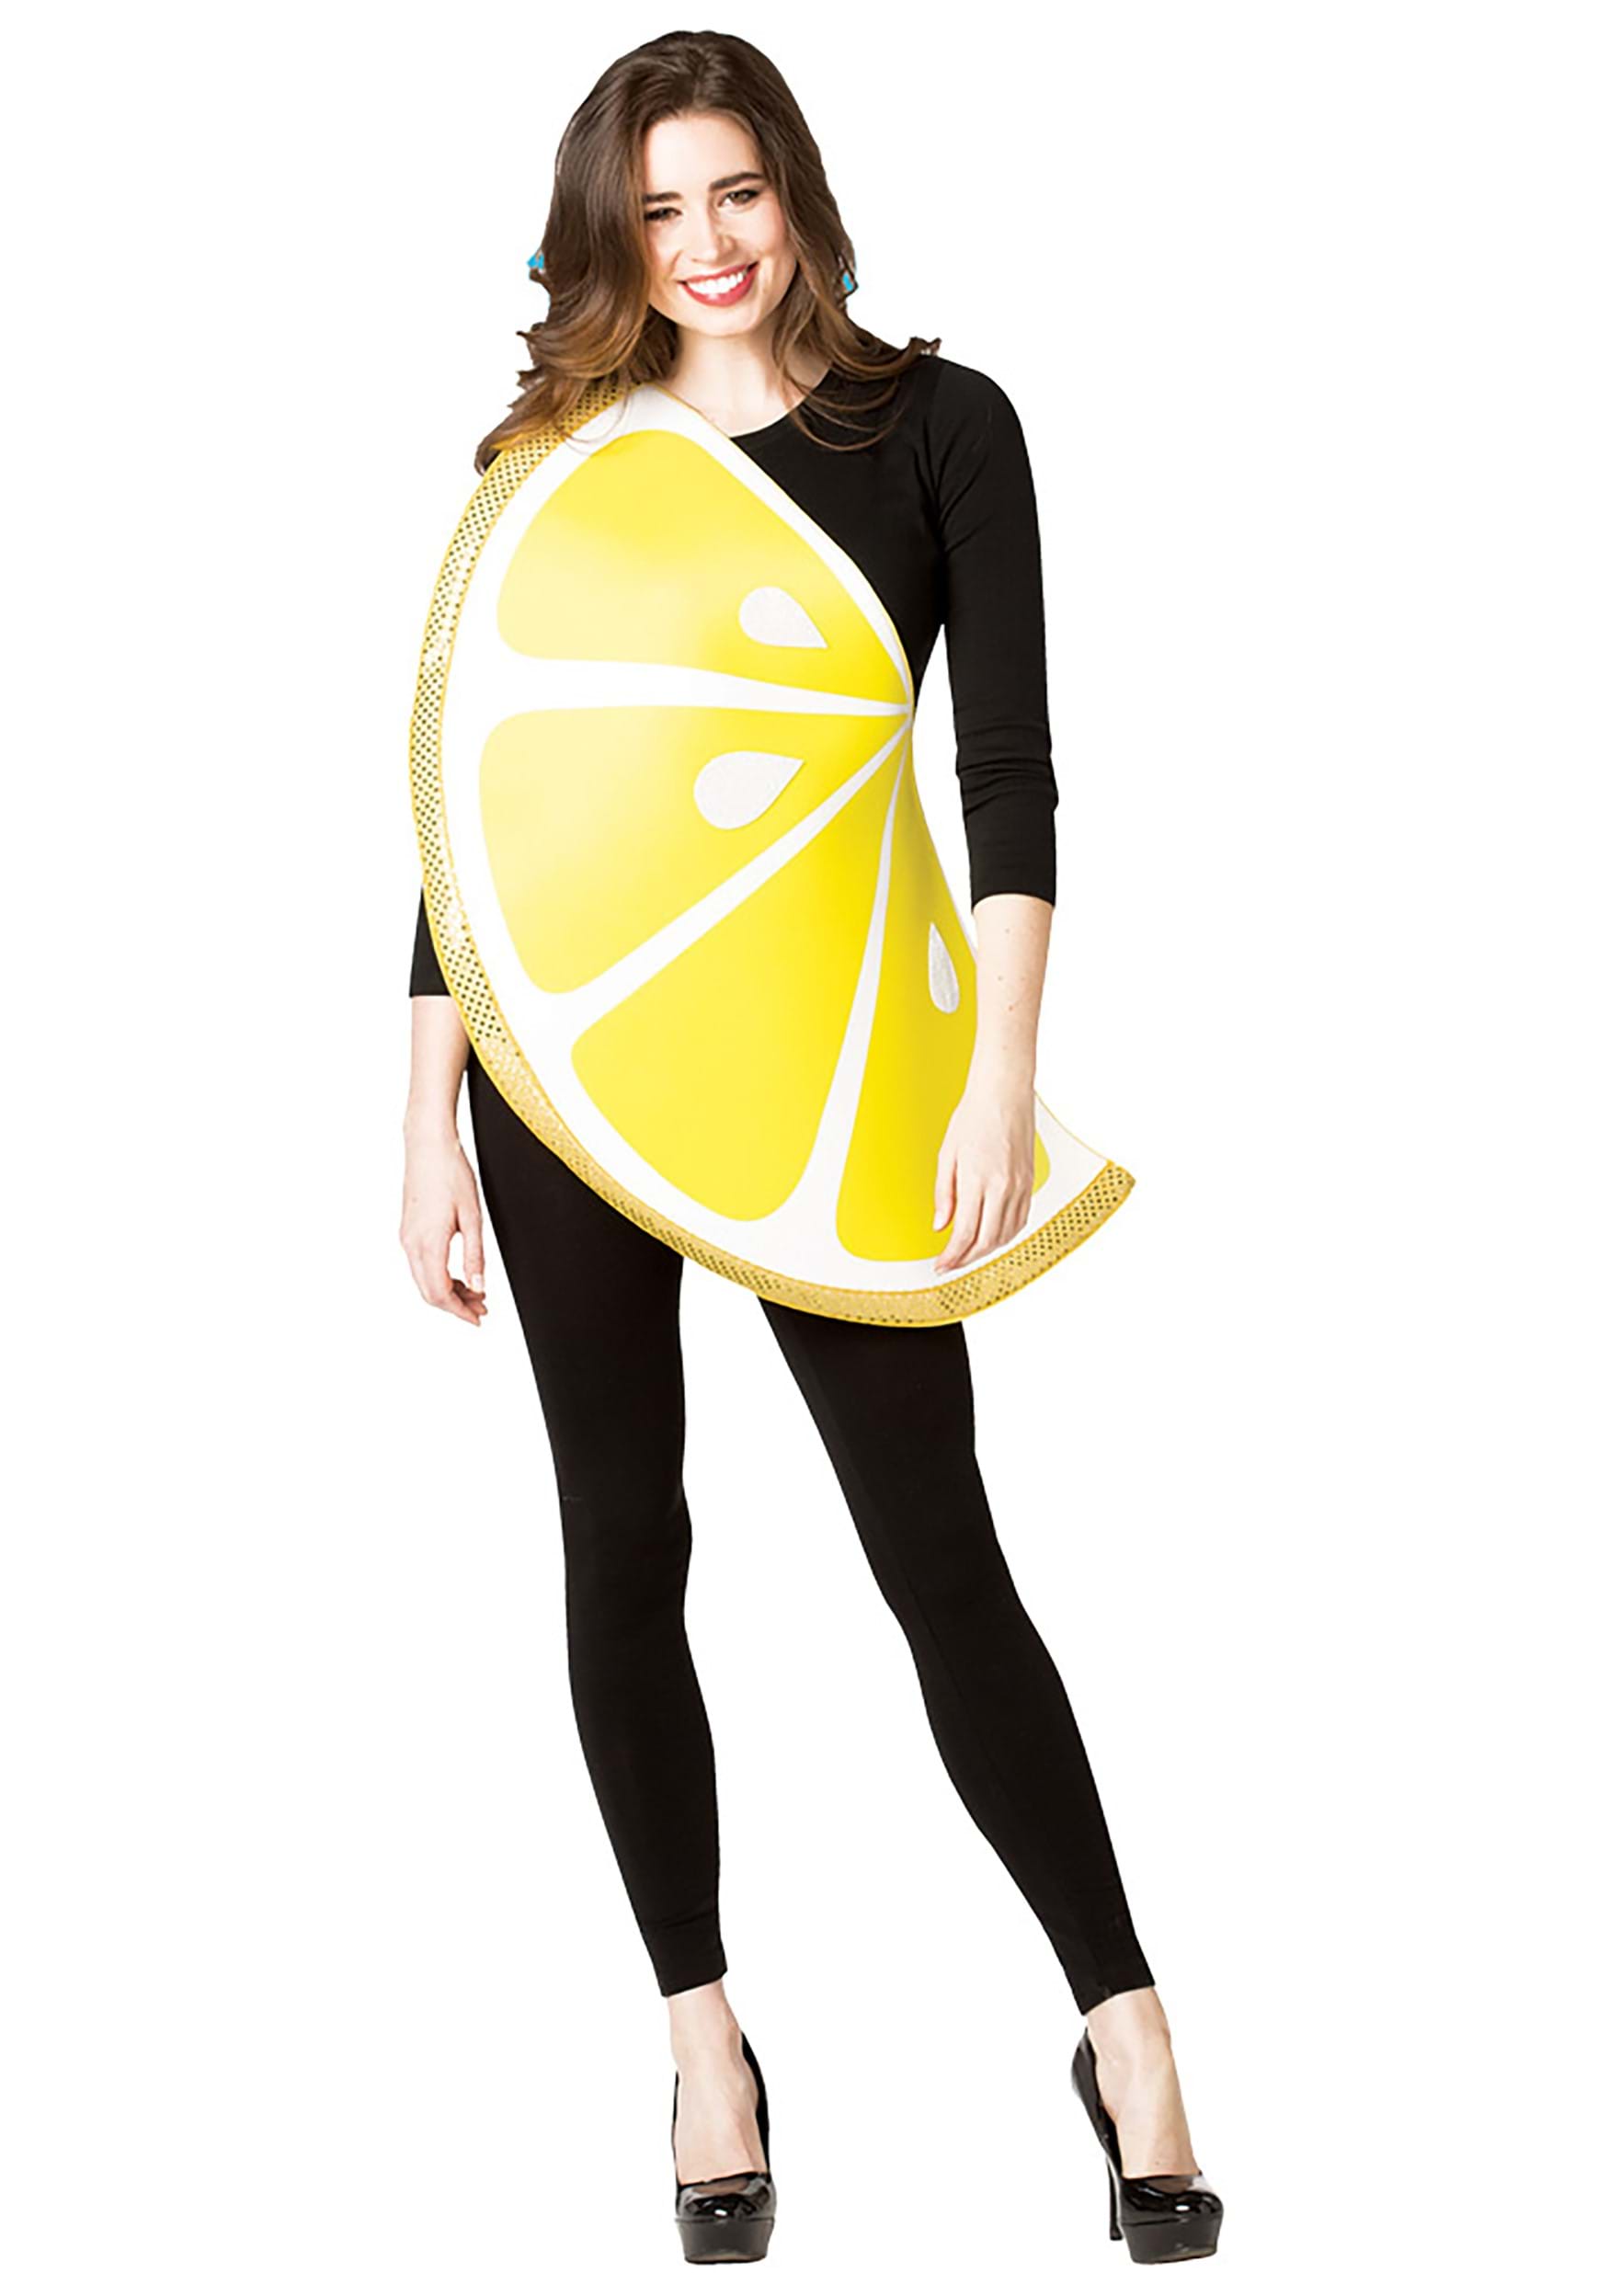 dressforfun Costume Limone Adulti unisex